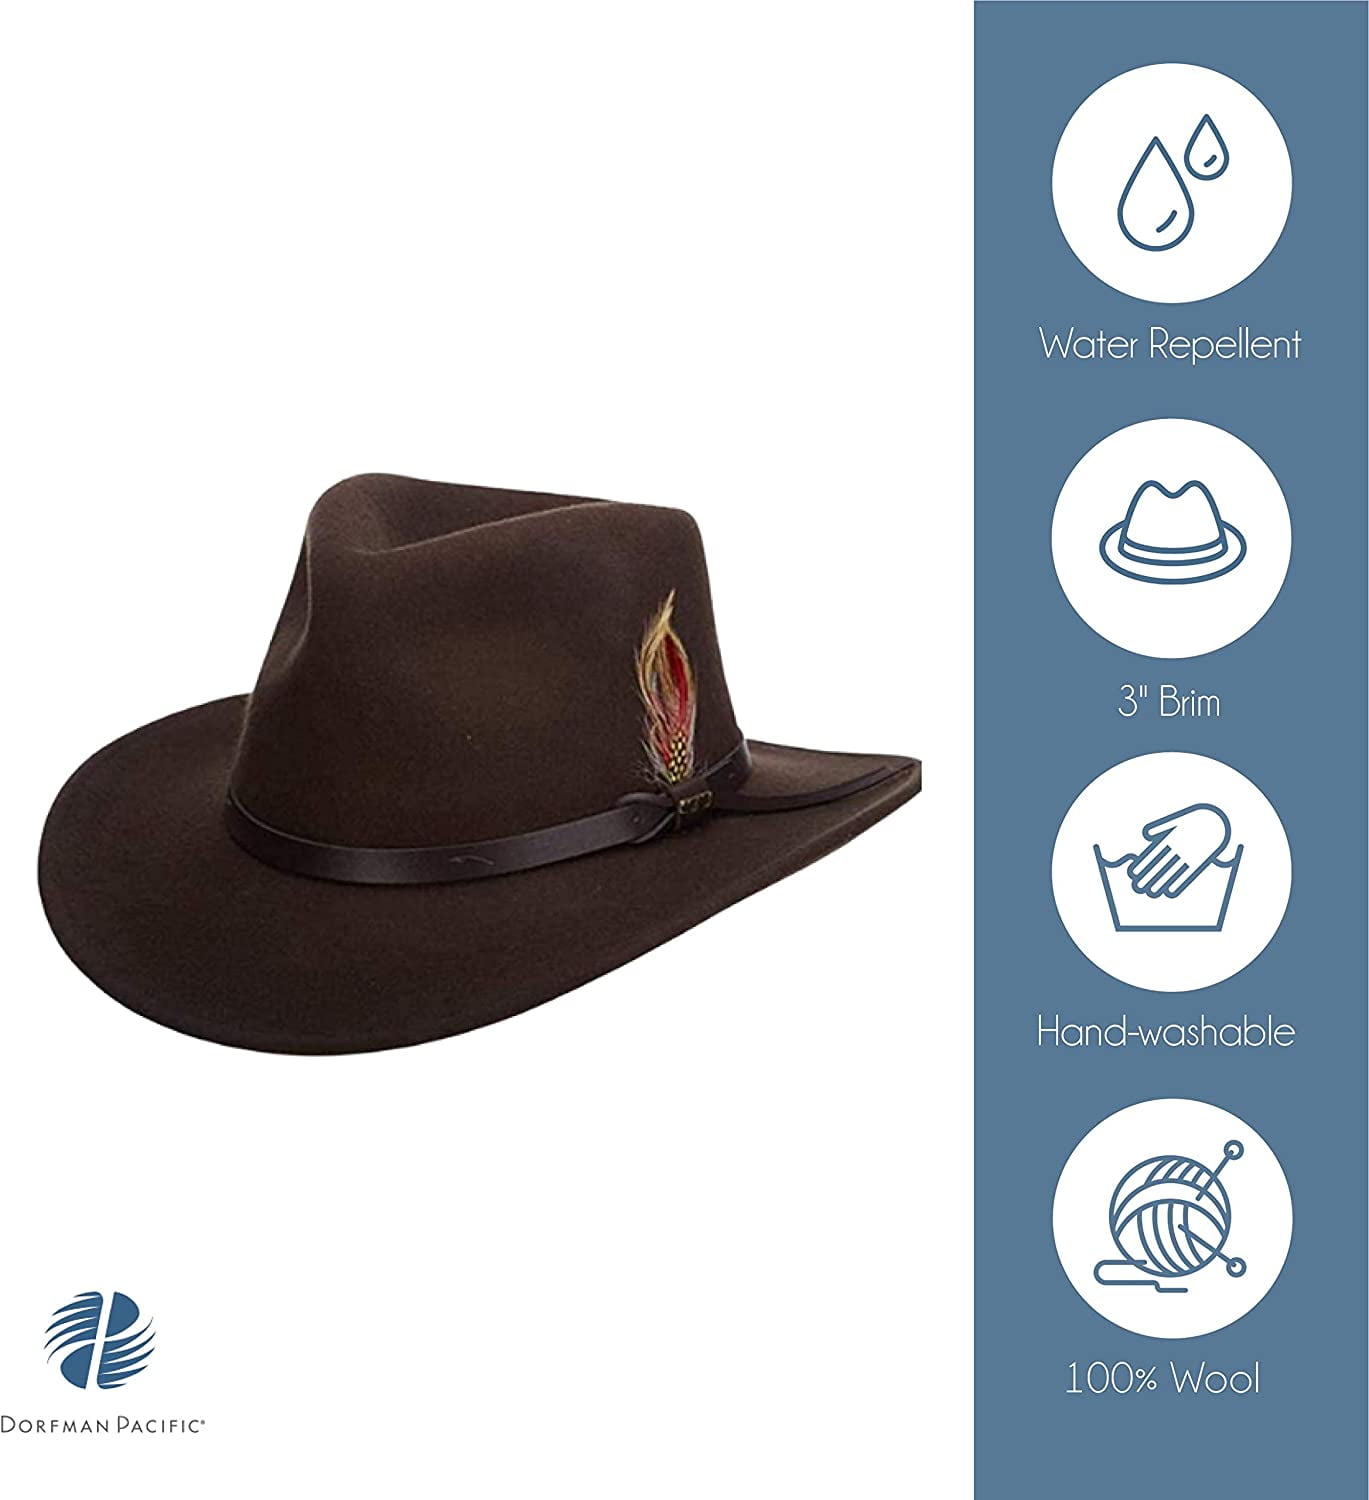 Scala Classico Men's Crushable Felt Outback Hat, Chocolate, Medium 